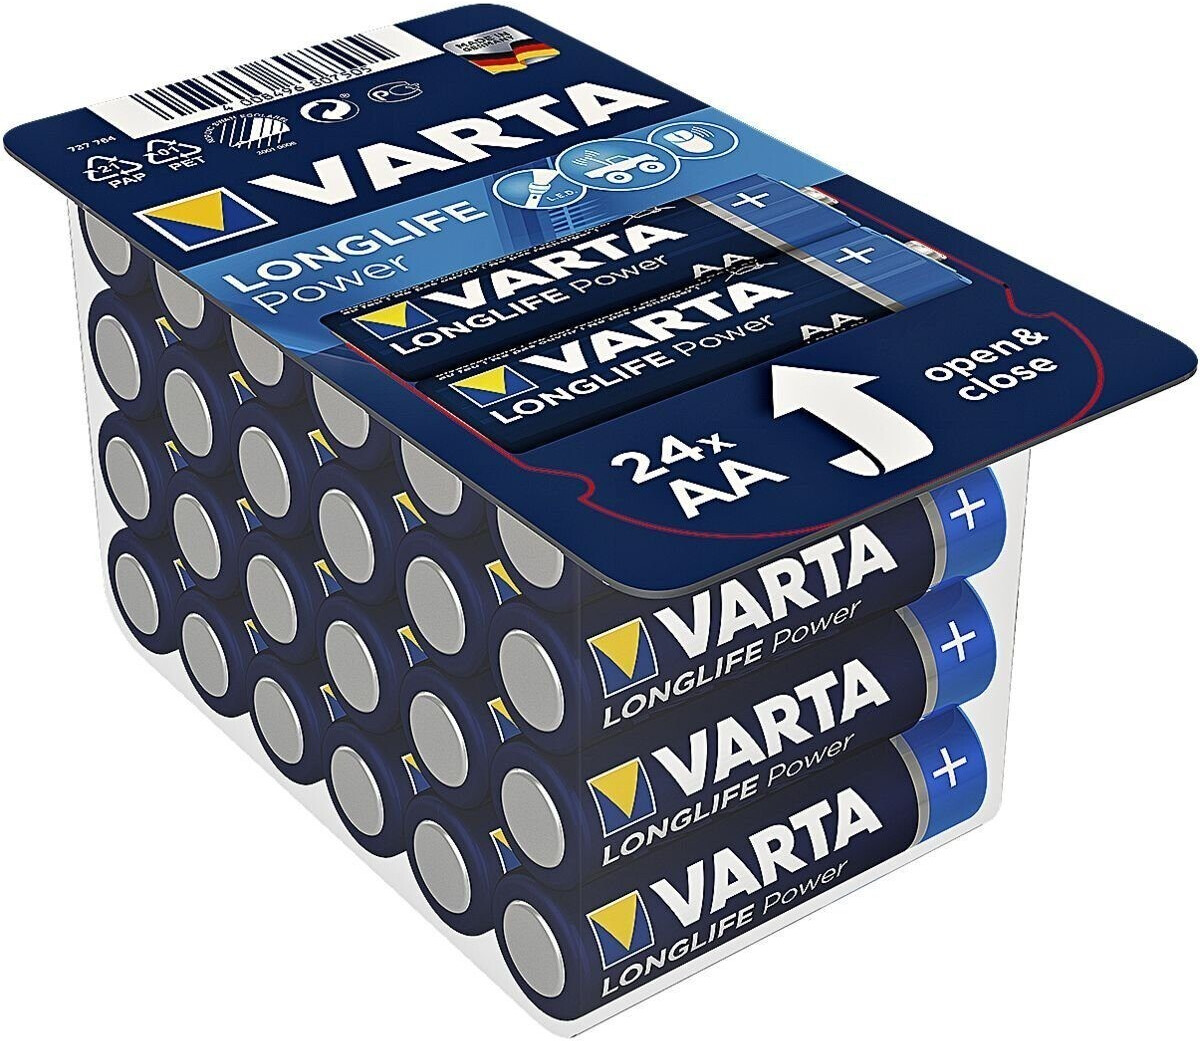 Varta Longlife Power AA High Energy Batteries 24 Pack - Screwfix